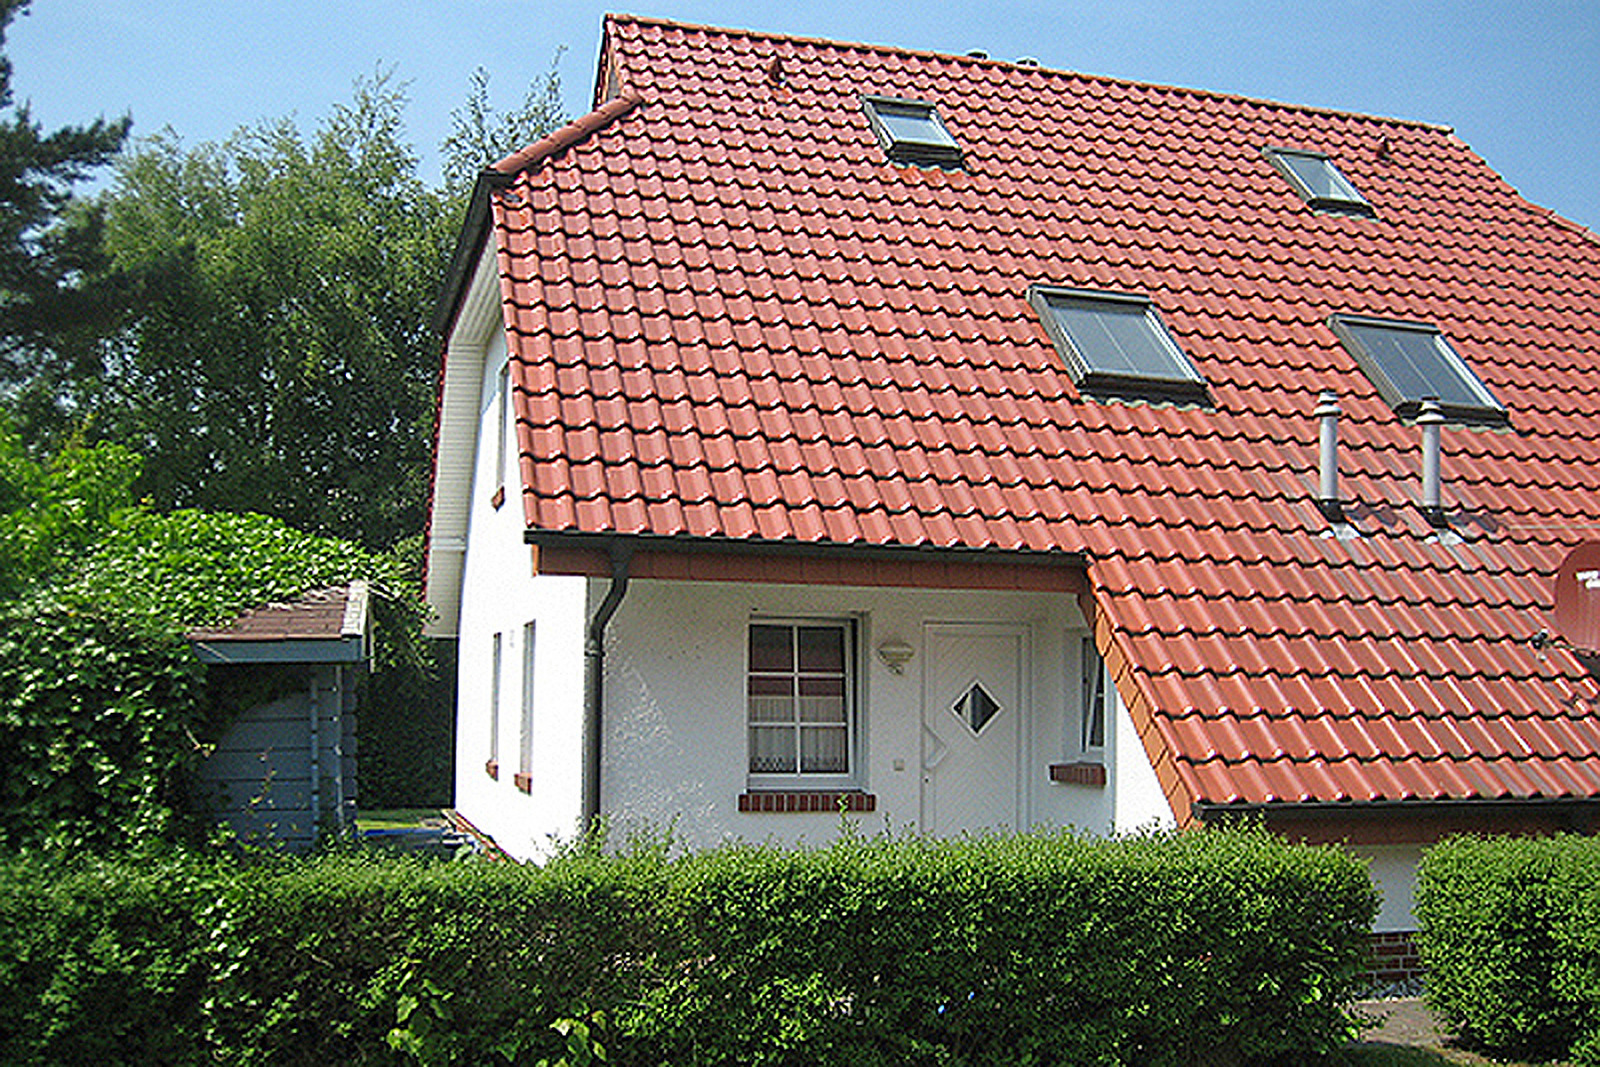 54 Grad Nord Ferienhaus in Zingst Ostseeheilbad